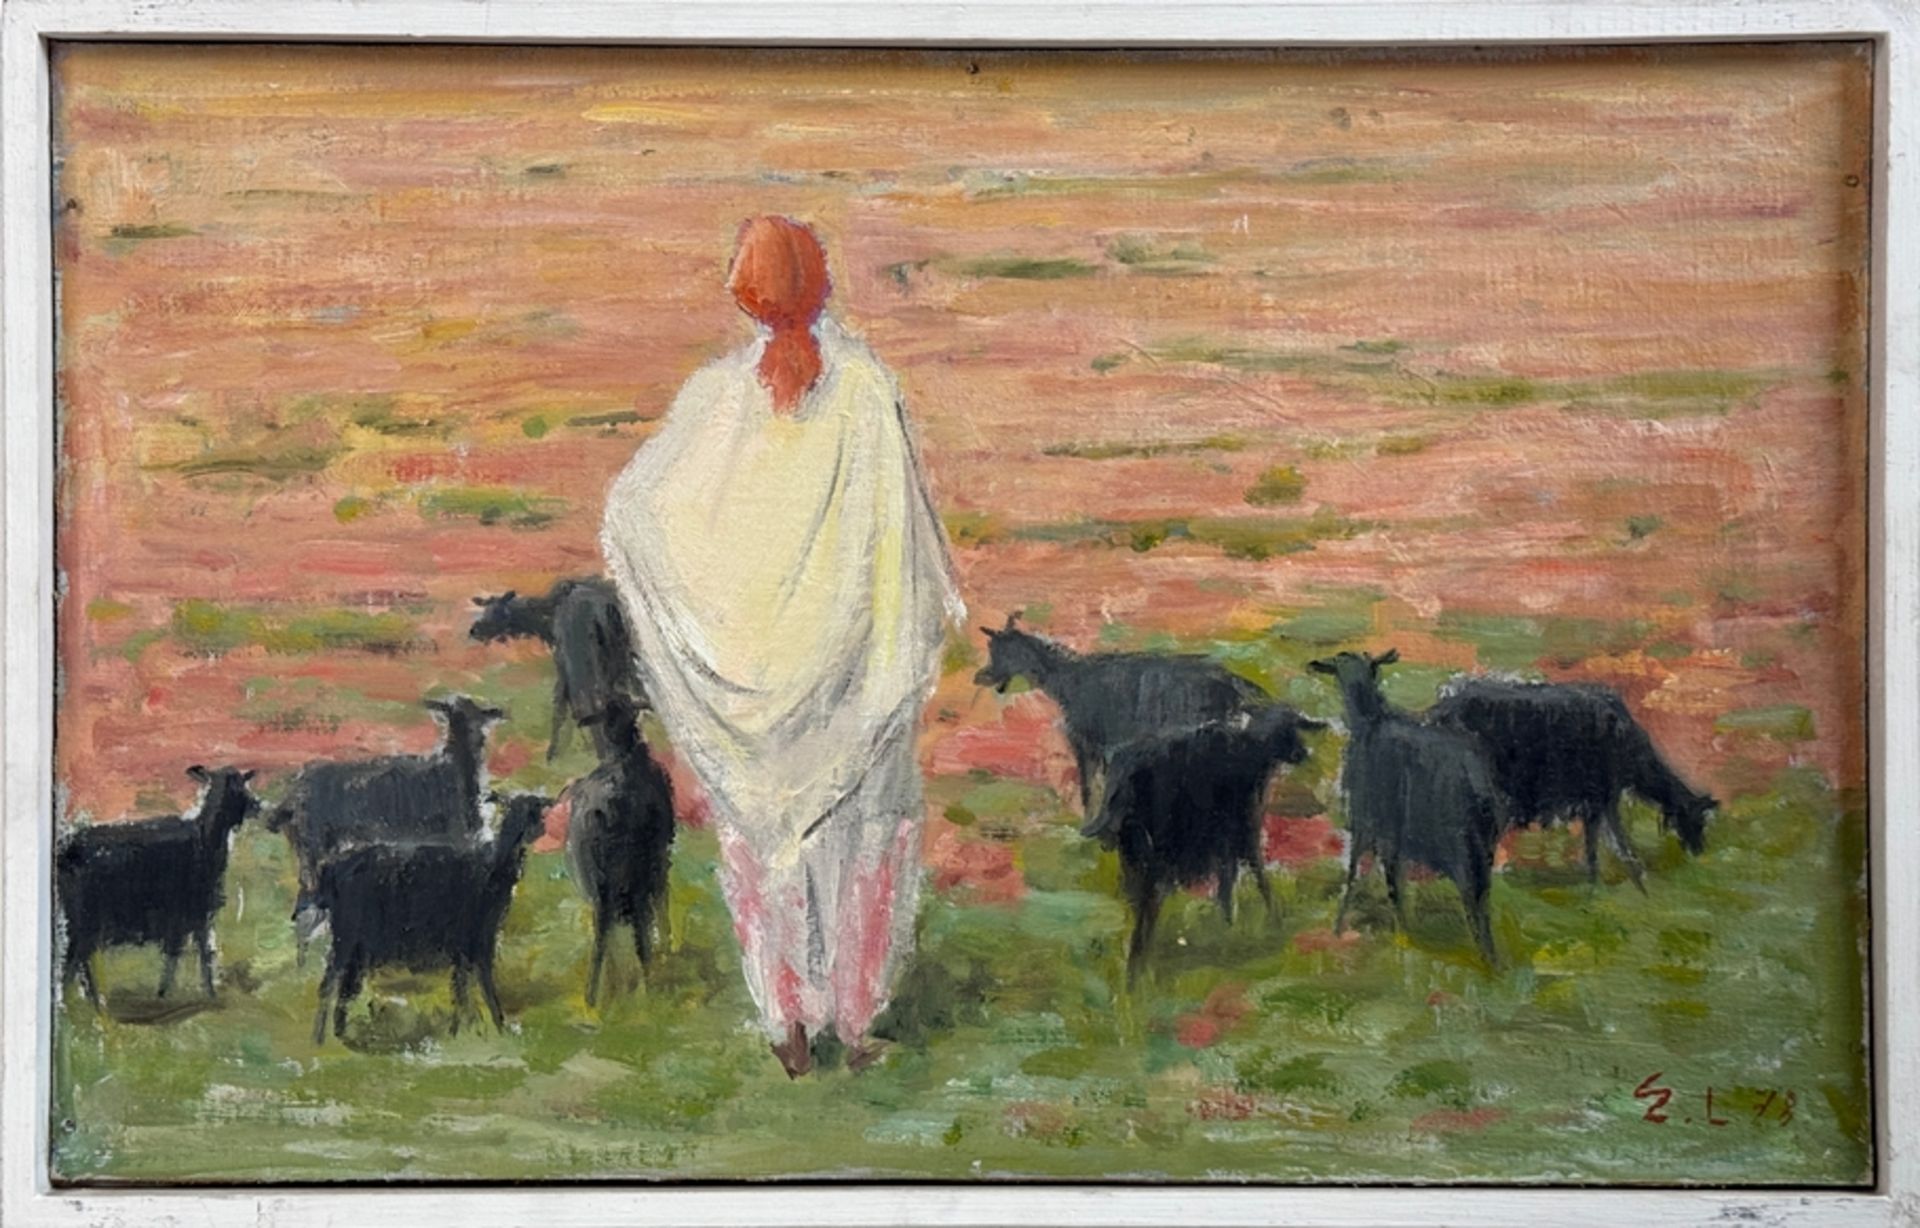 Leu, Ernst (1913 Kölliken - 1994 Zollikon) "Grazing goats" with shepherd, probably North African sc